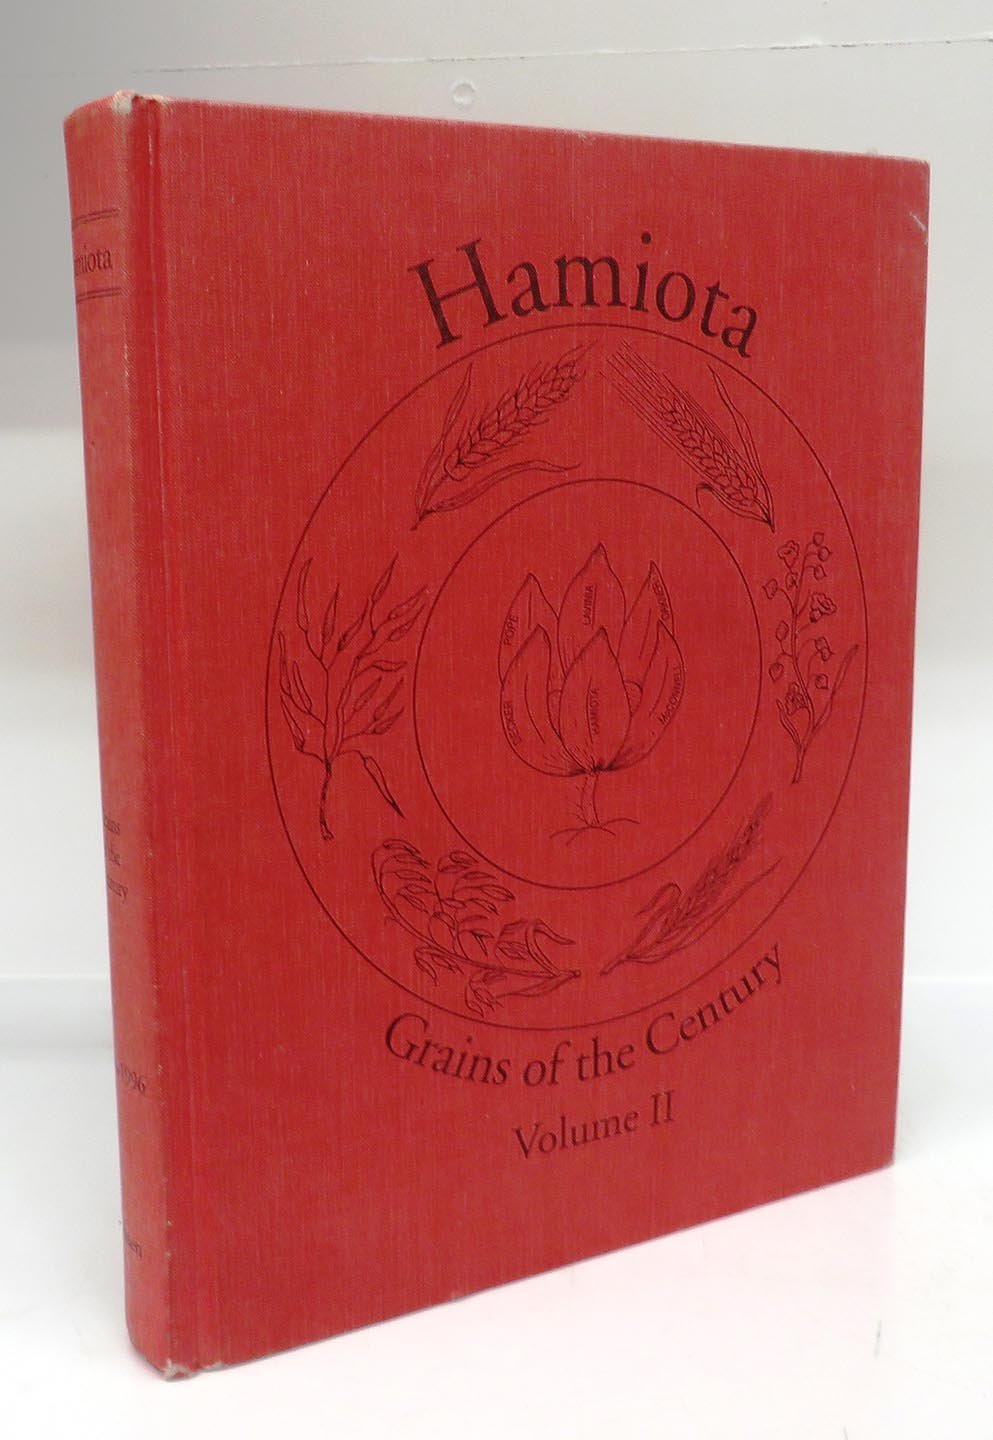 Hamiota: Grains of the Century. Volume II